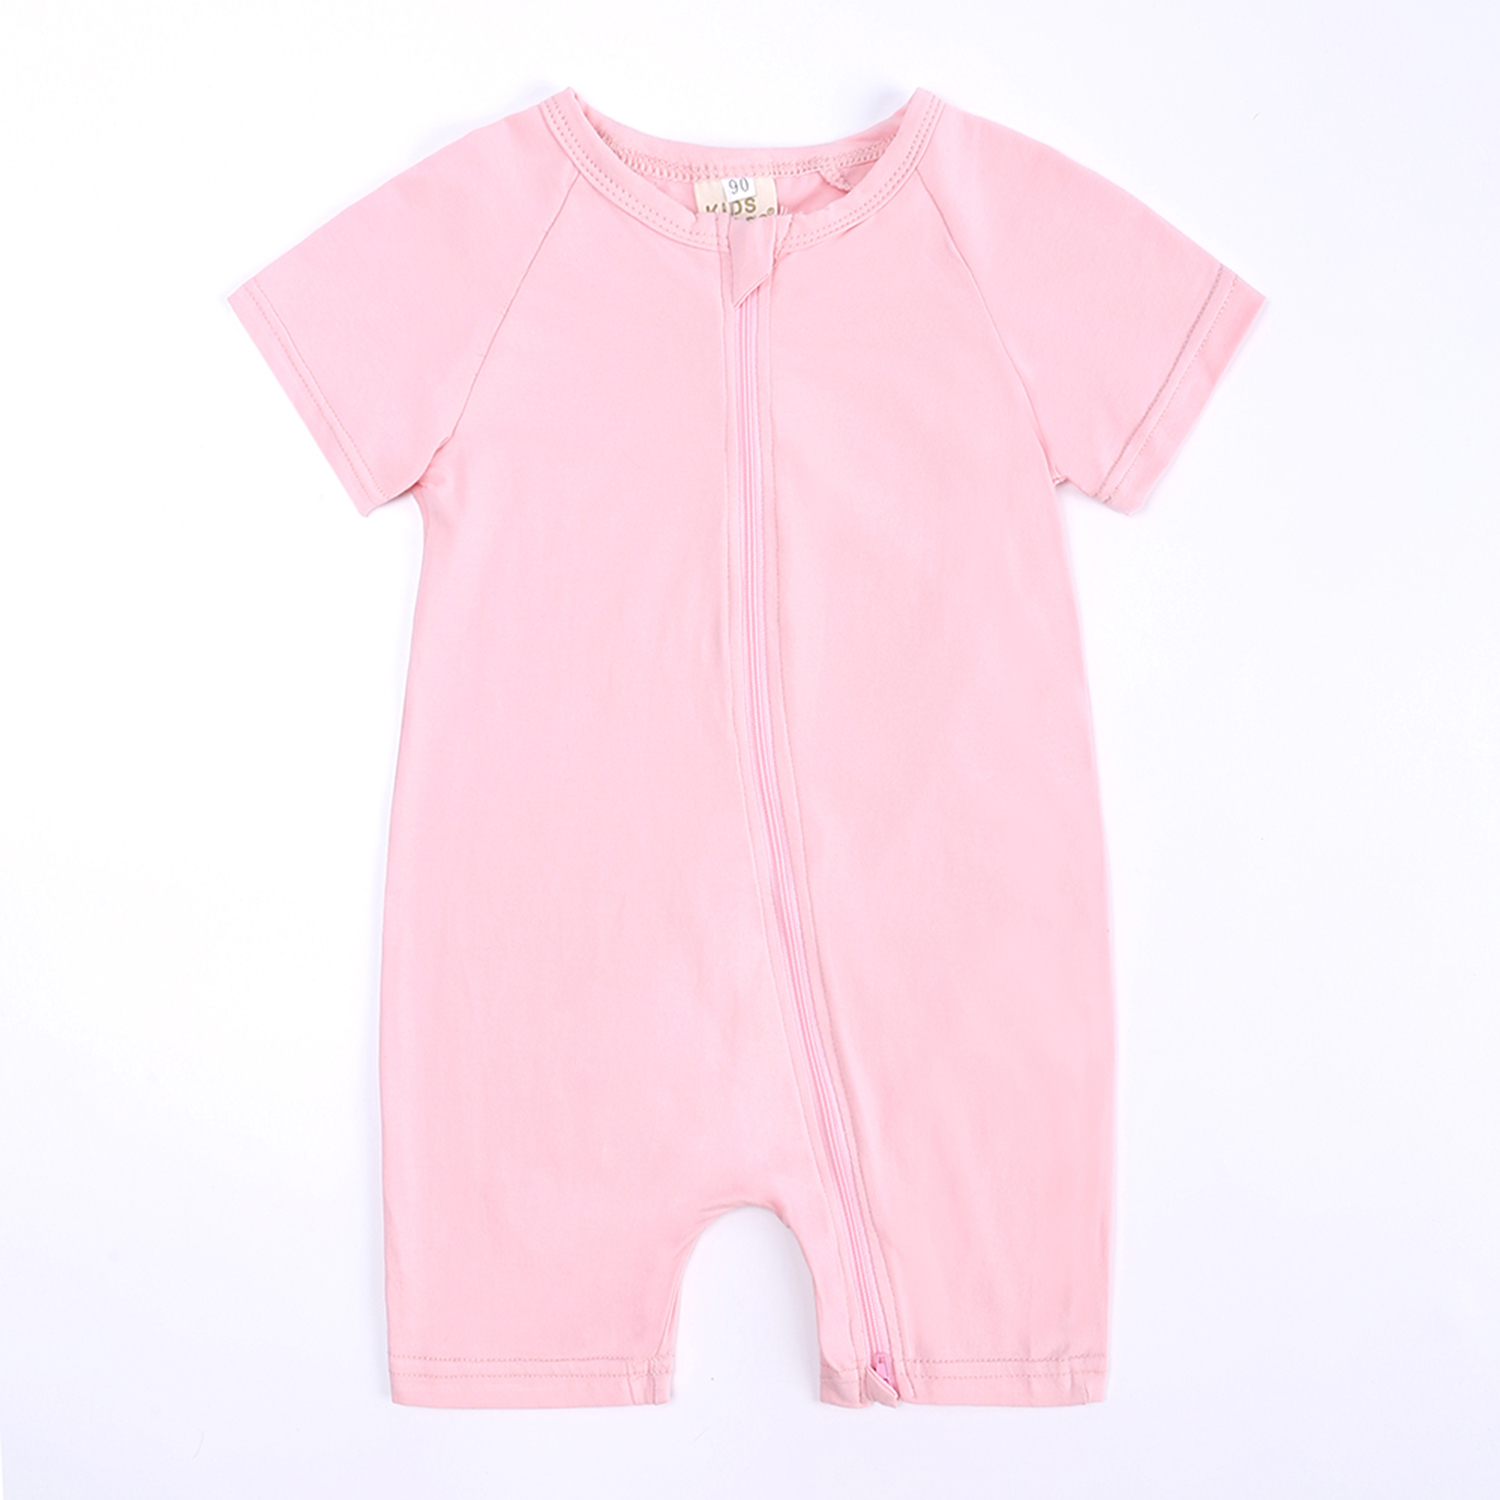 Kids Tales - Short sleeve short baby romper pink 6-9mo cotton zipper infant bodysuit sleeper